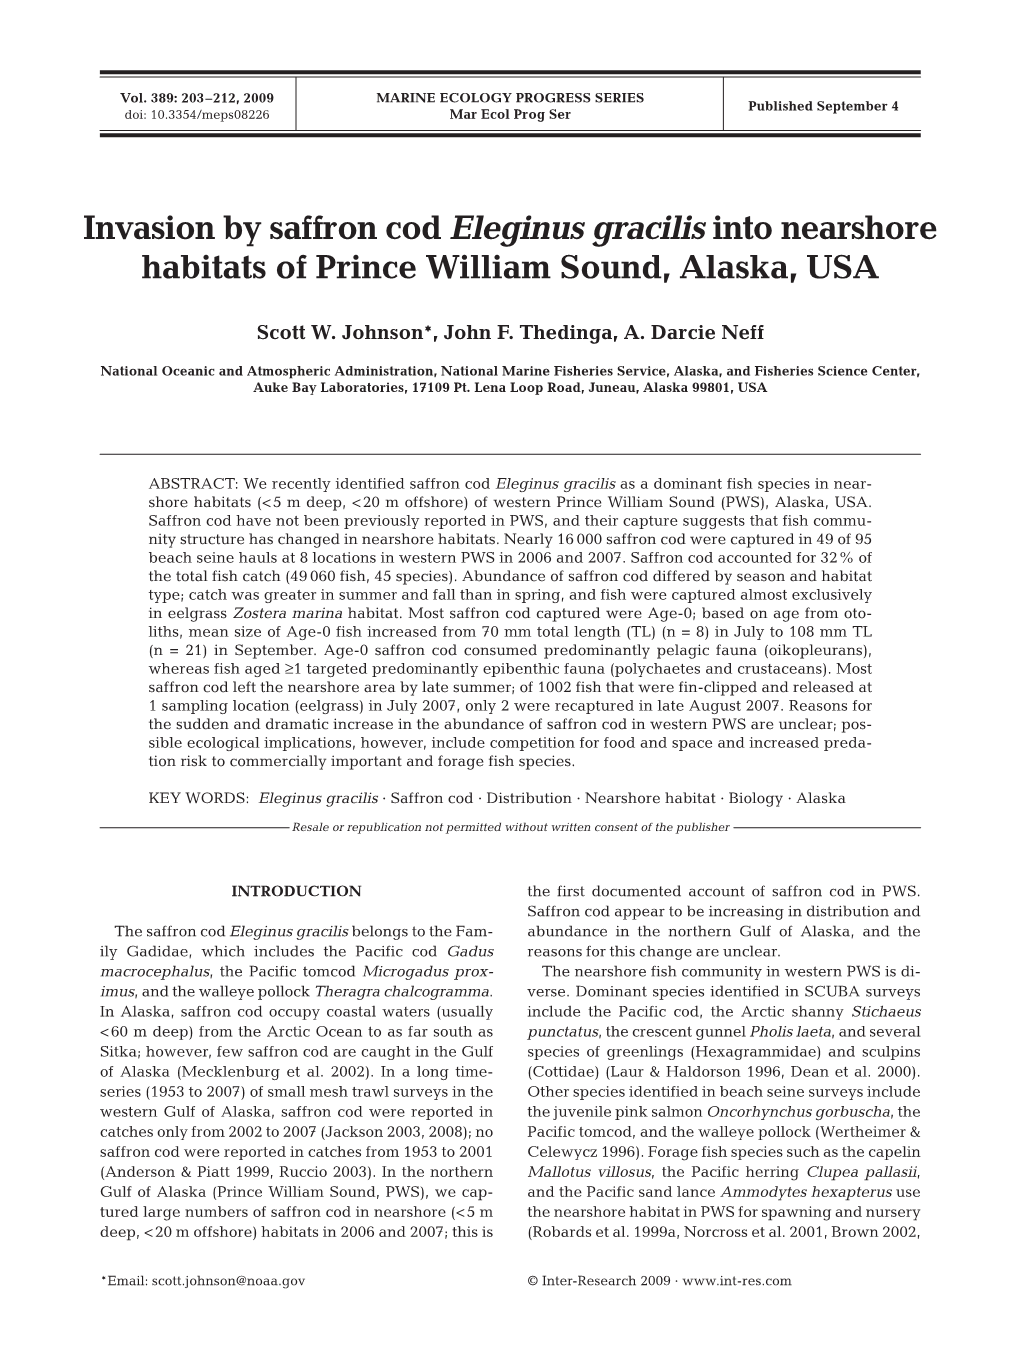 Invasion by Saffron Cod Eleginus Gracilis Into Nearshore Habitats of Prince William Sound, Alaska, USA